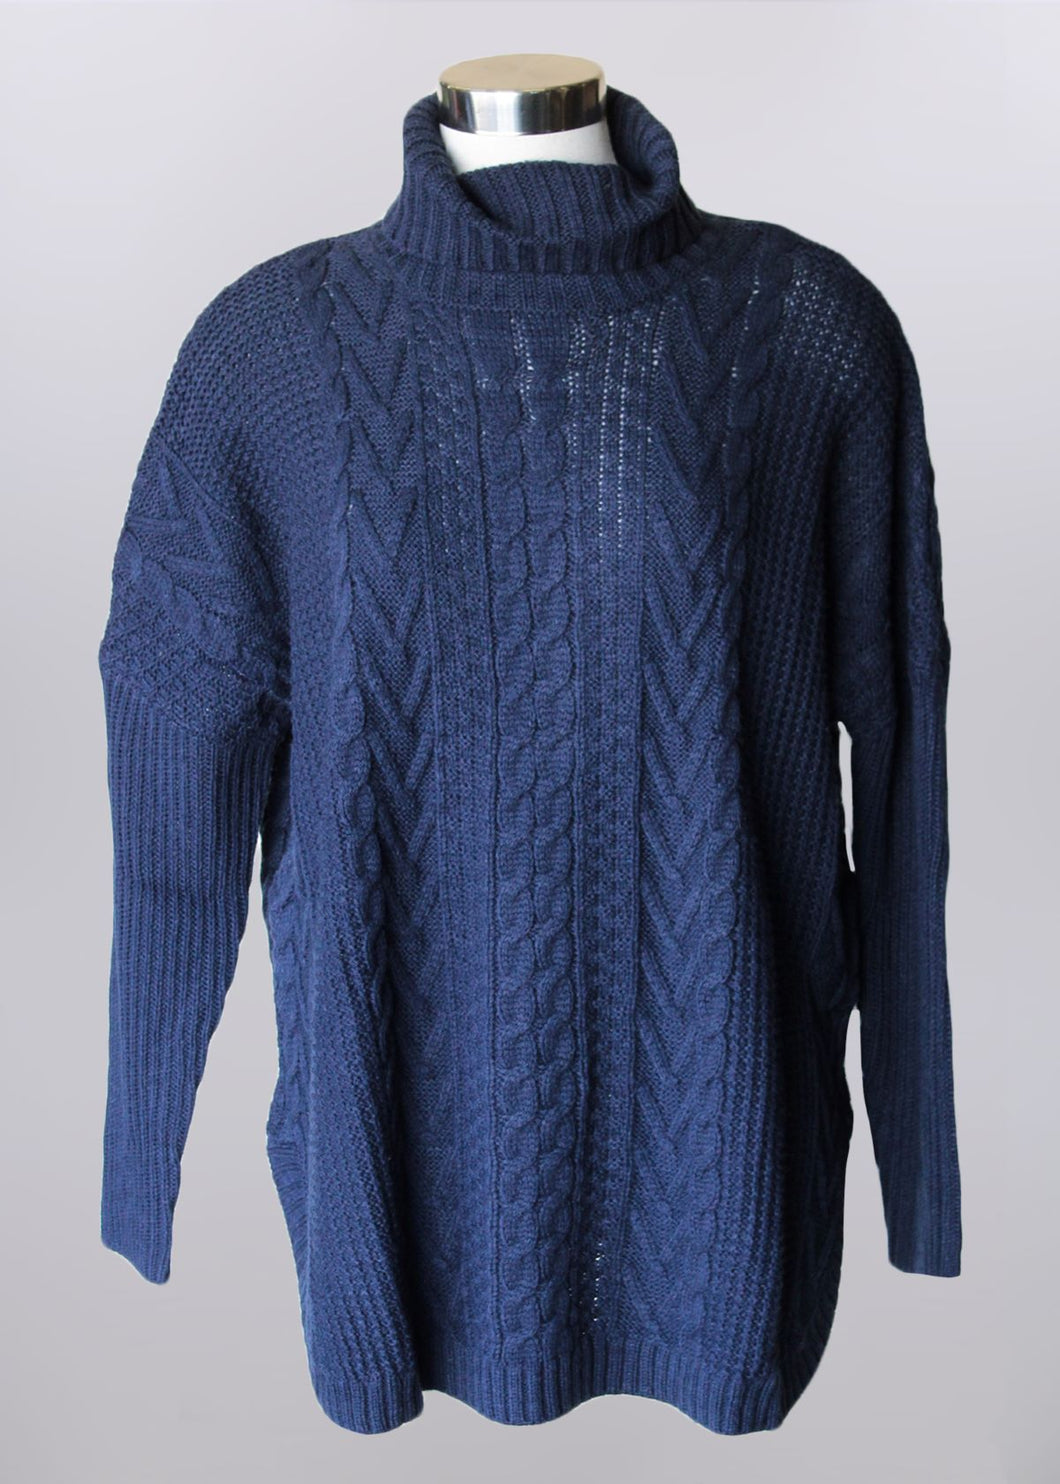 'Keren Hart' Women's Pullover Cowl Neck Sweater - Navy